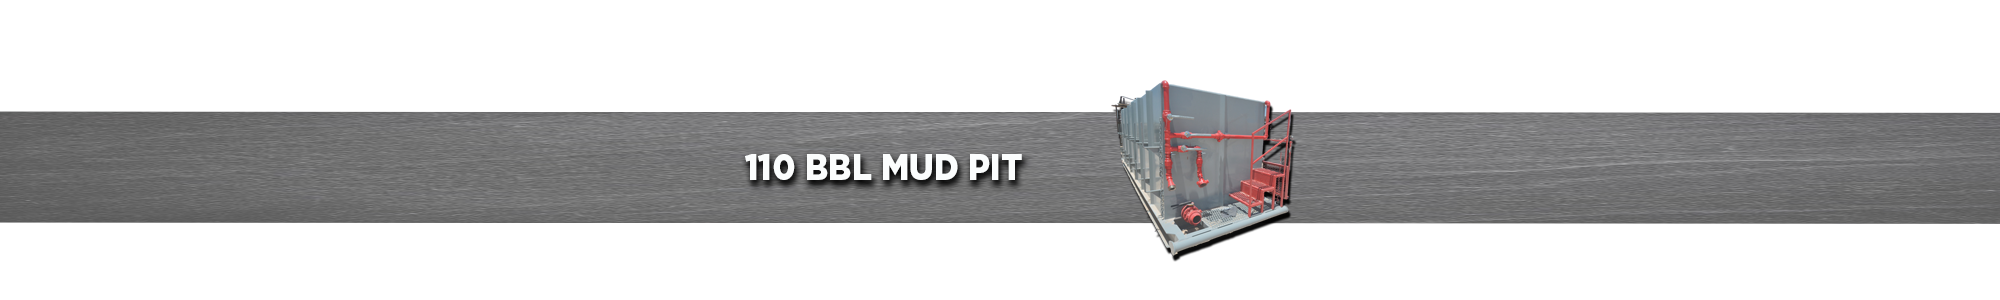 110BBL Mud Pit